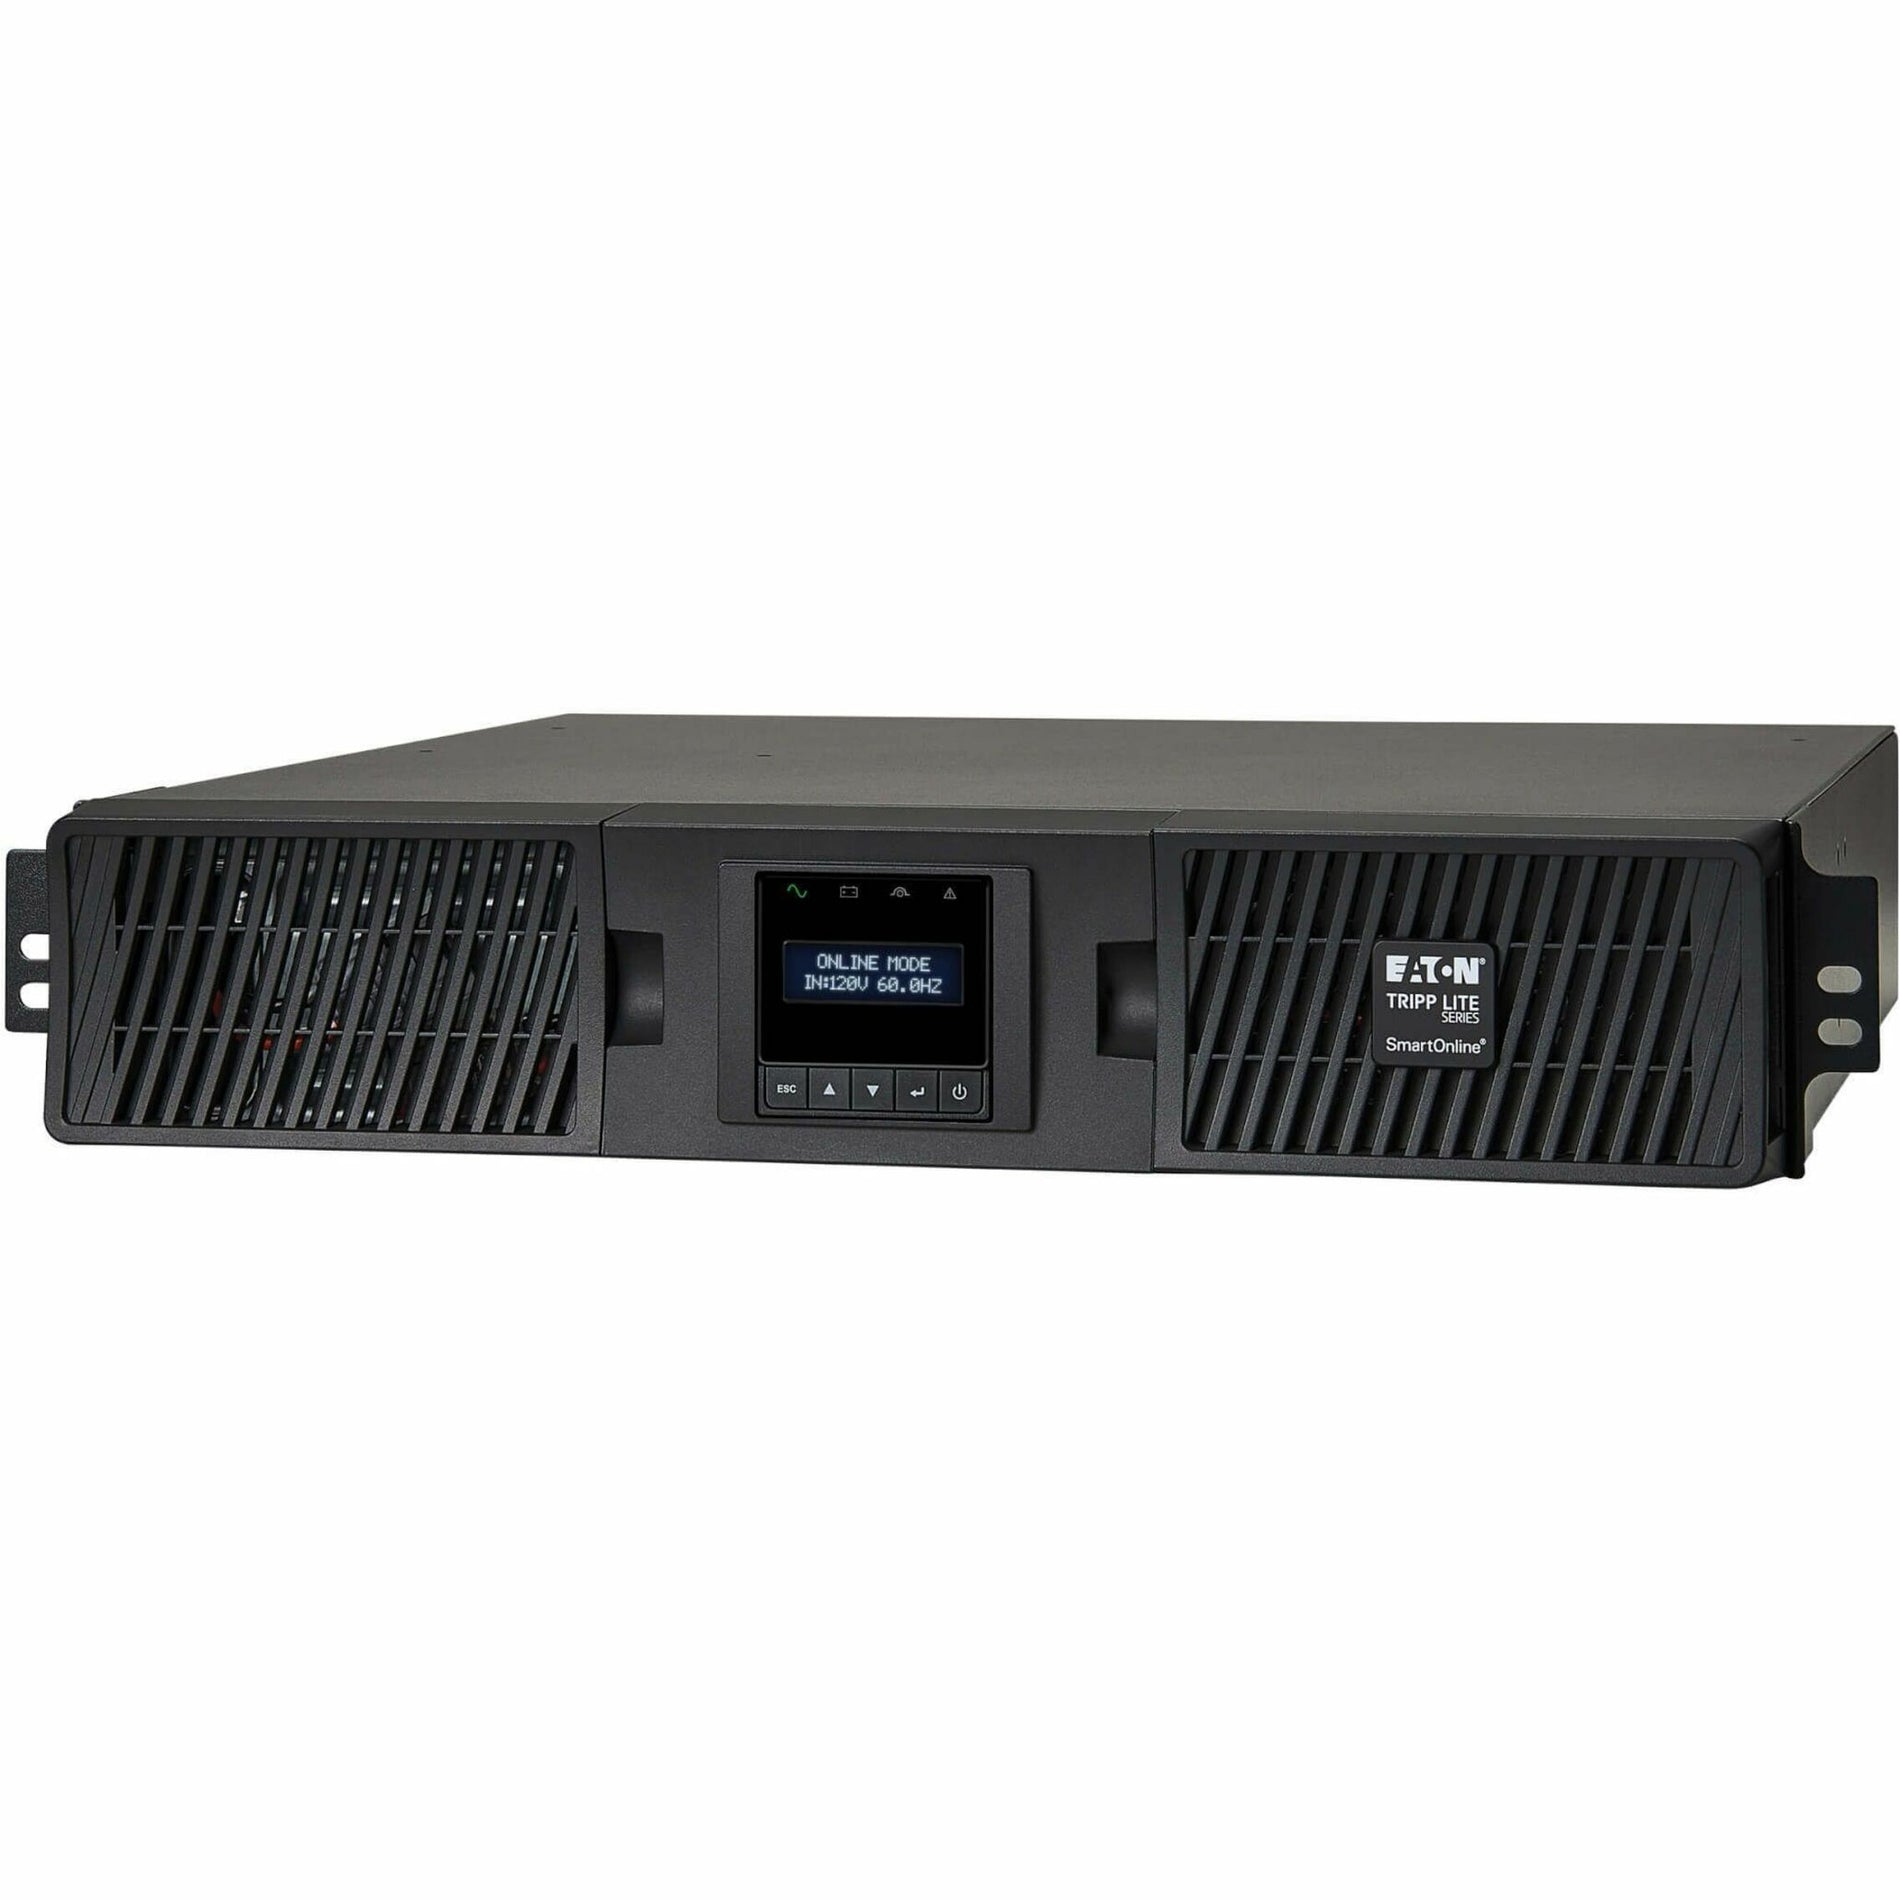 Tripp Lite SU2200RTXLCD2U SmartOnline 2200VA Tower/Rack Mountable UPS 1800W LCD Display